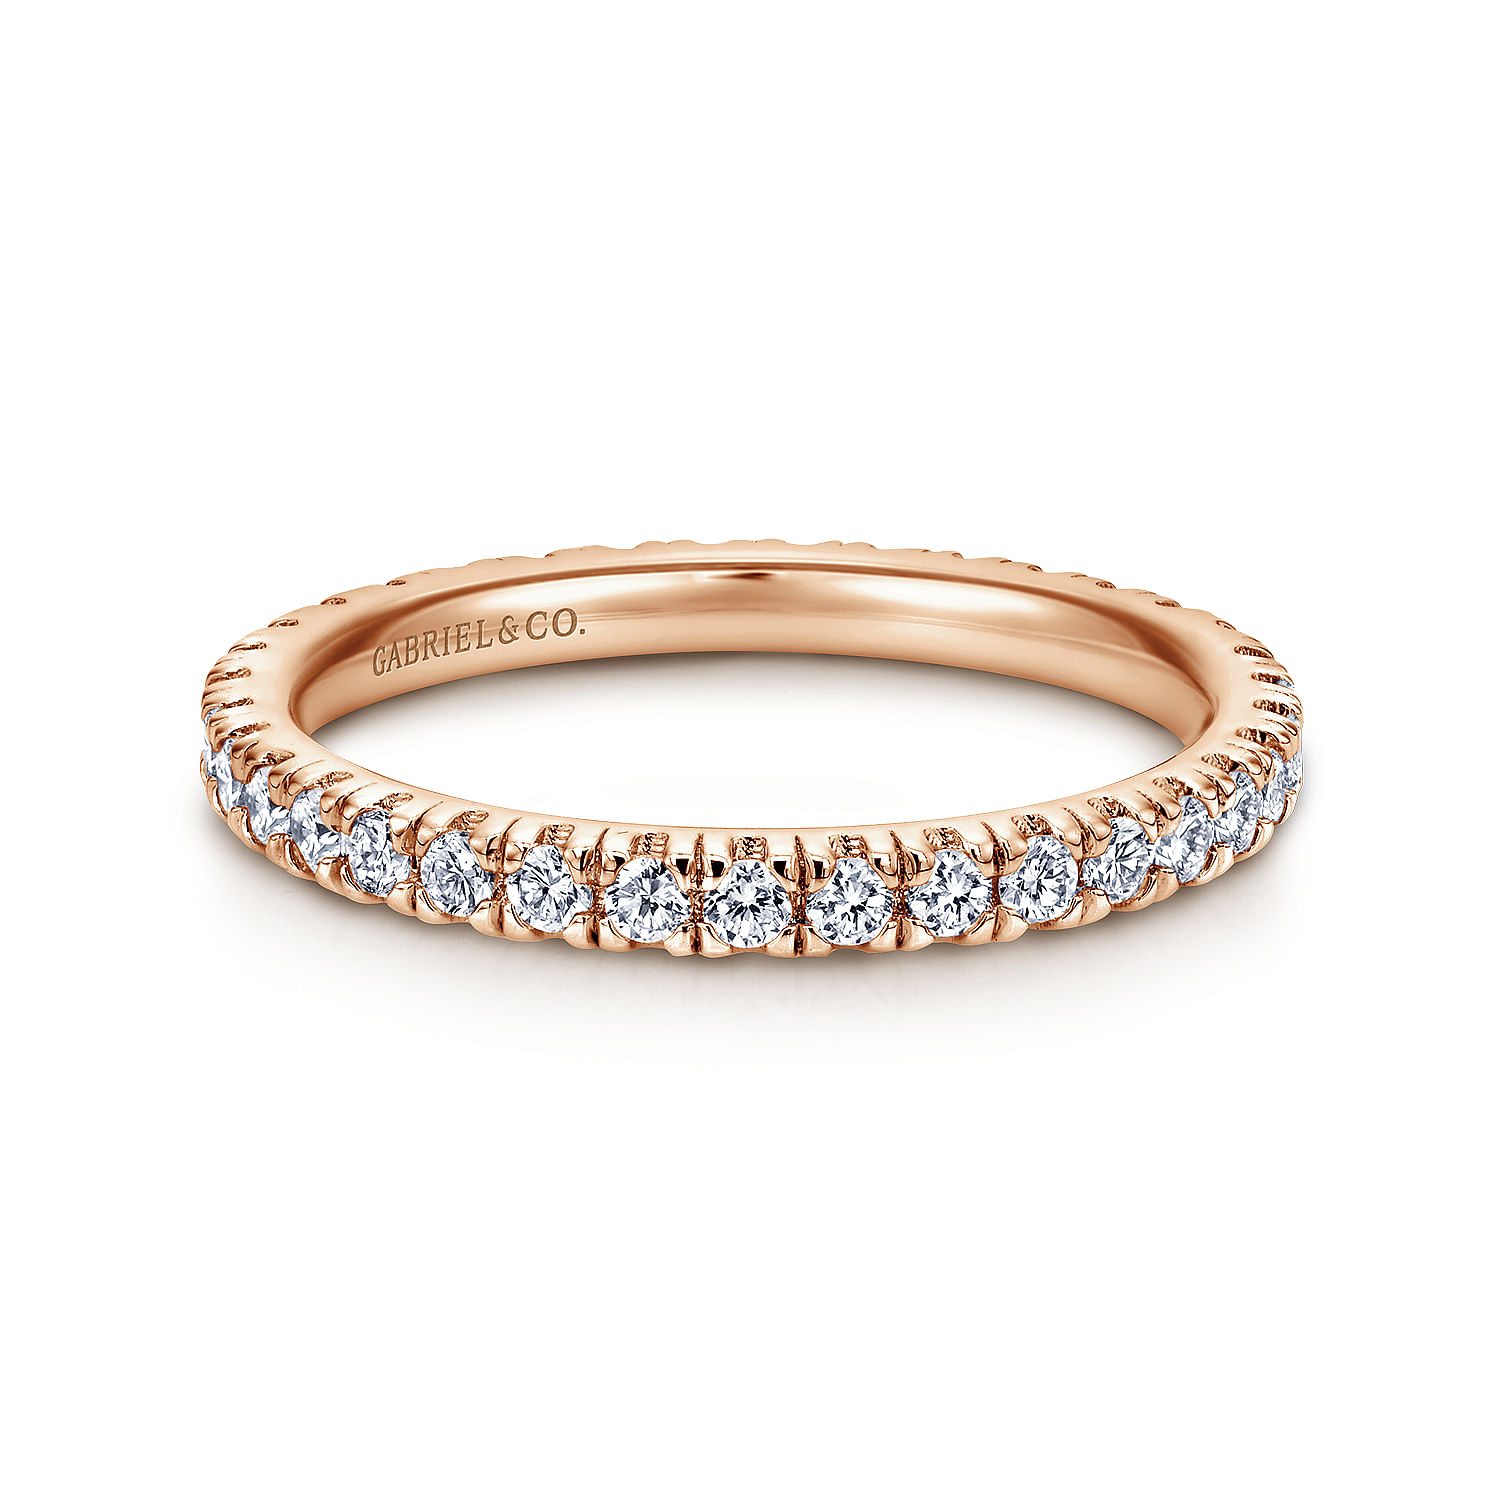 Avignon - French Pave  Eternity Diamond Ring in 14K Rose Gold